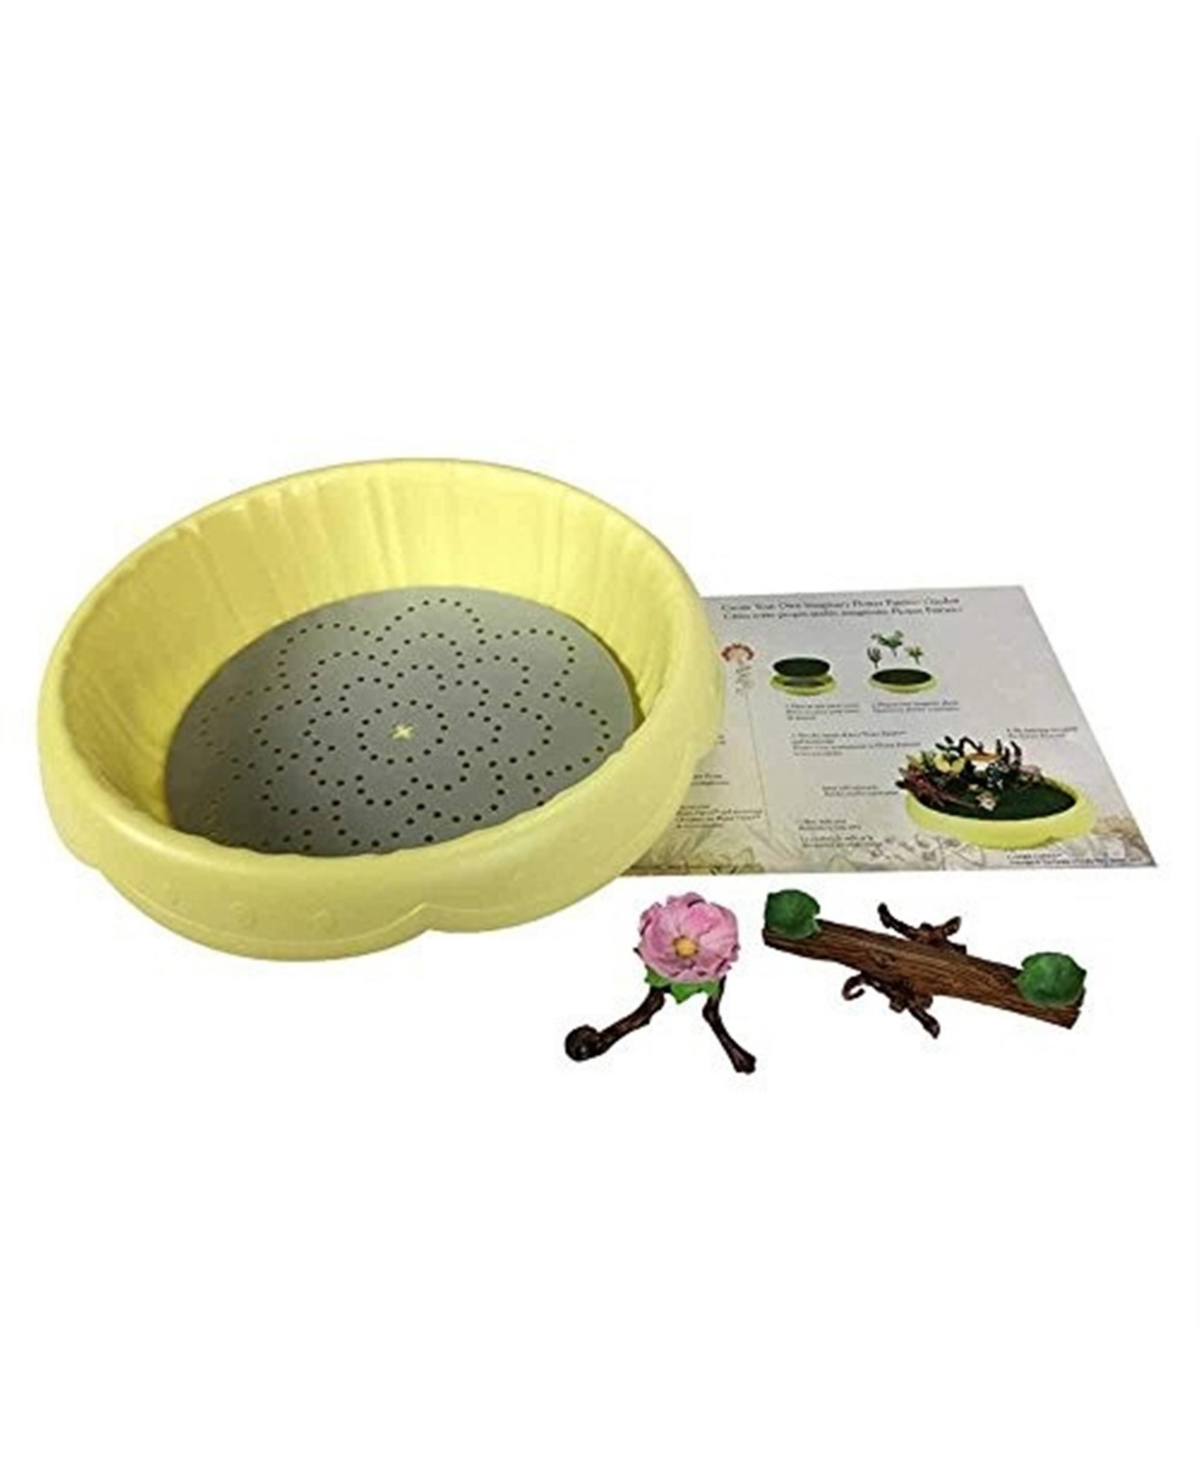 Secret Garden Planter Kit w/ Teeter Totter & Birdbath - Multi